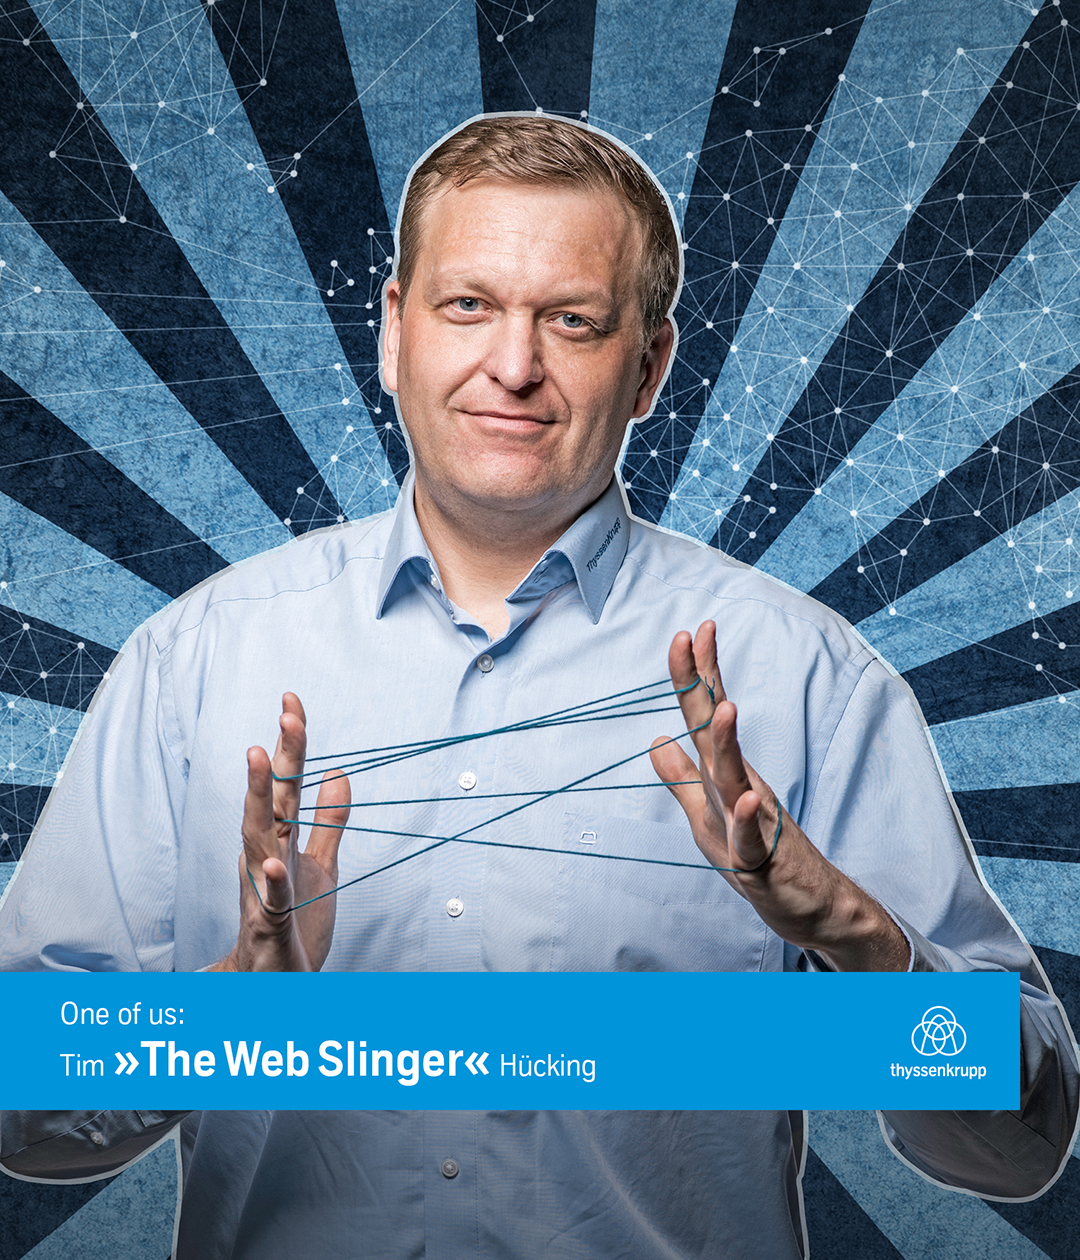 Tim >>The Web Slinger<< Hücking >>Tim Hücking<<